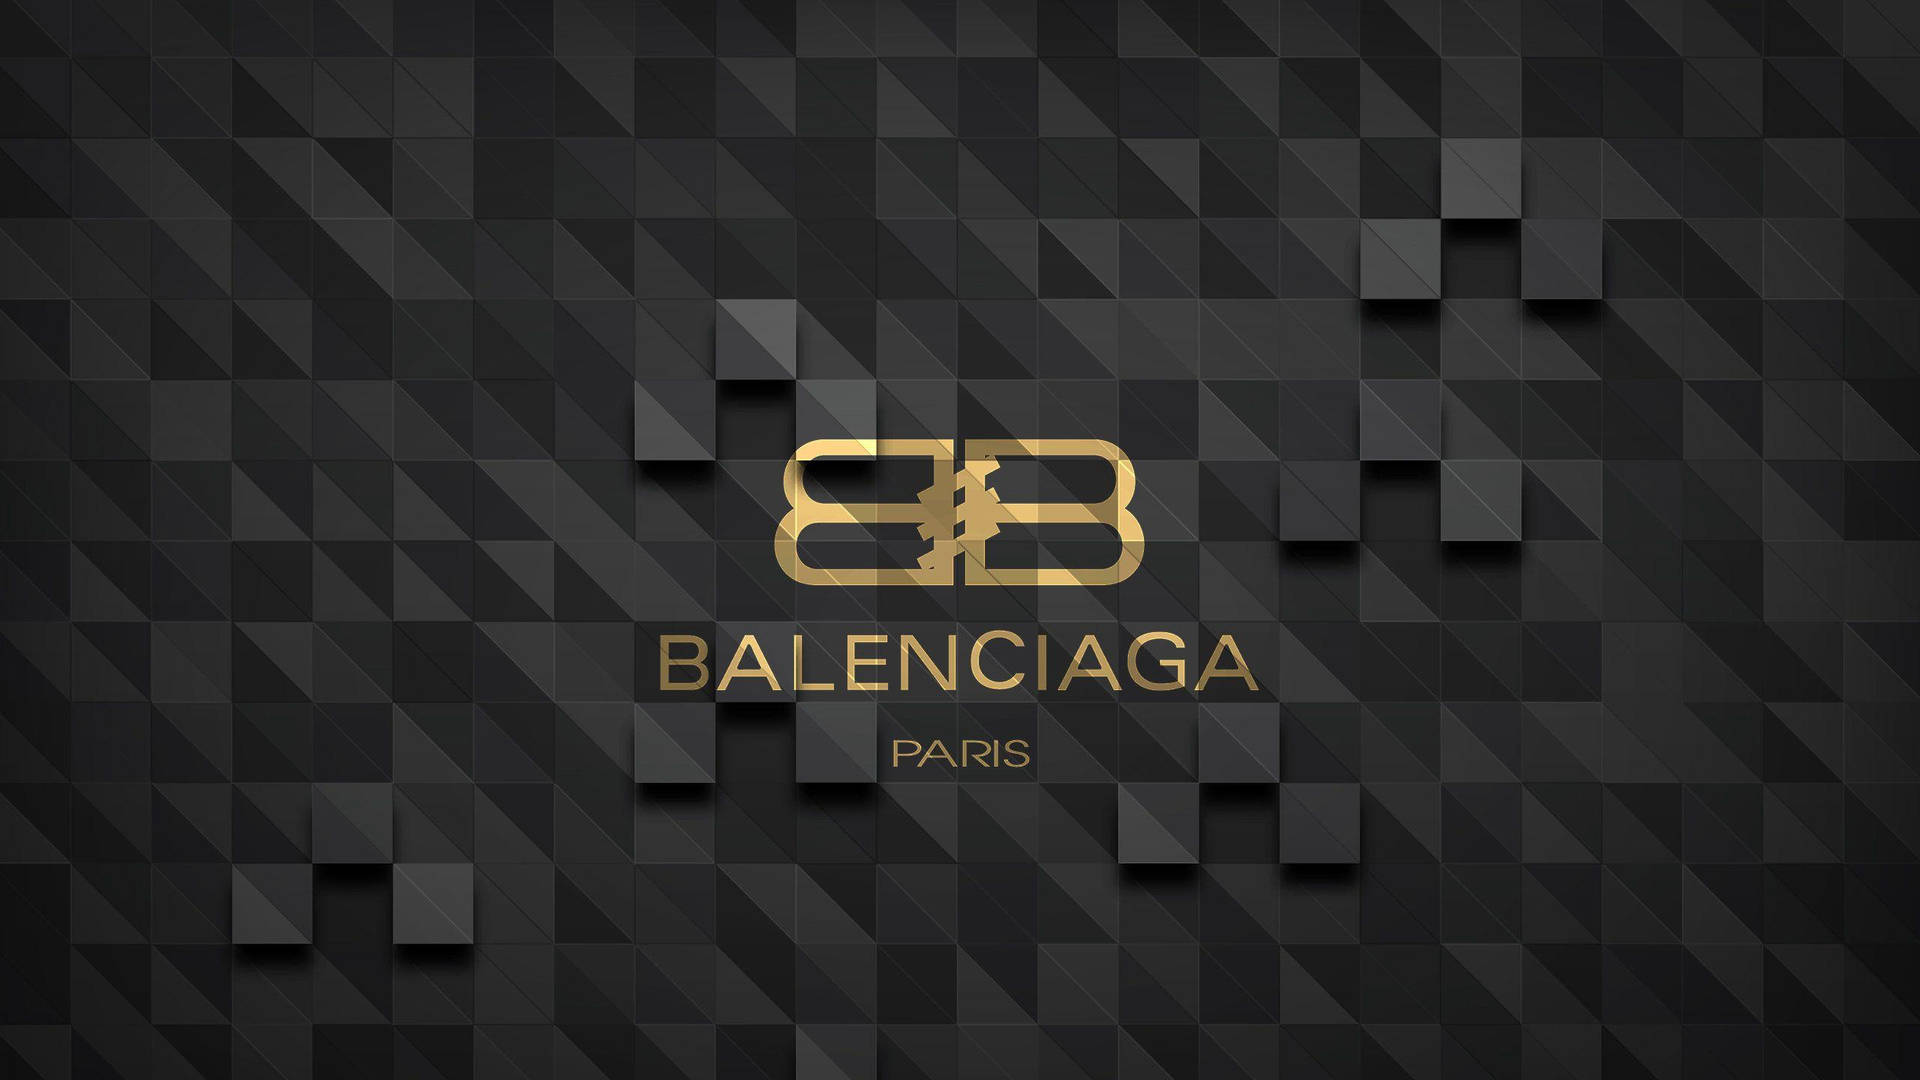 Balenciaga 2560X1440 Wallpaper and Background Image